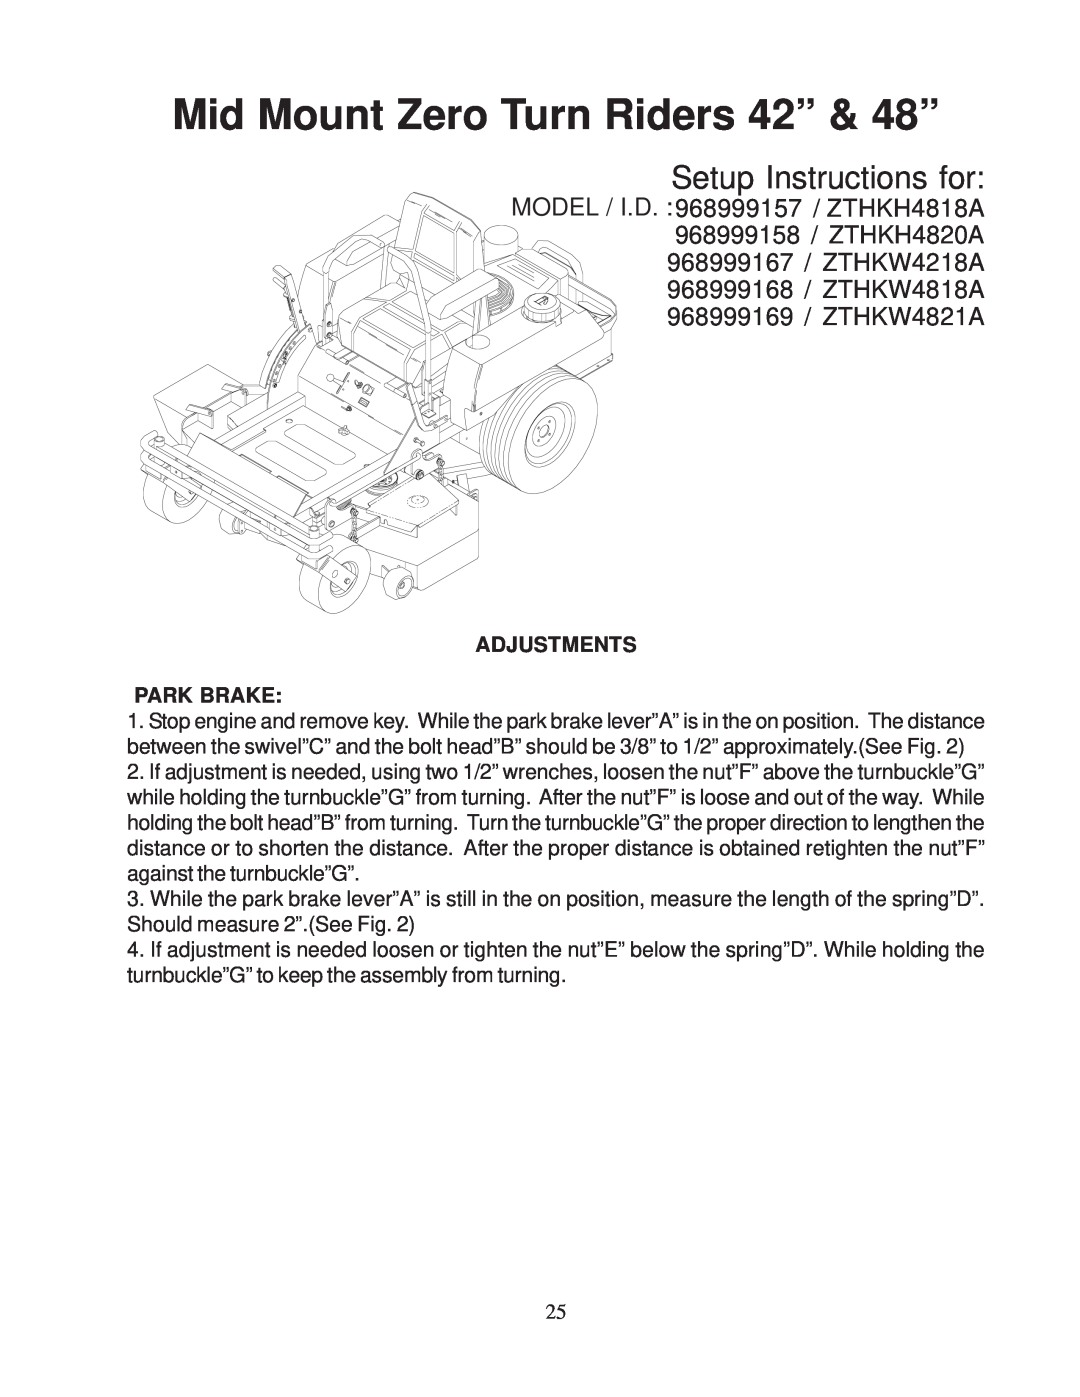 Husqvarna 968999107 / W3213A manual Mid Mount Zero Turn Riders 42” & 48”, Setup Instructions for, Adjustments Park Brake 